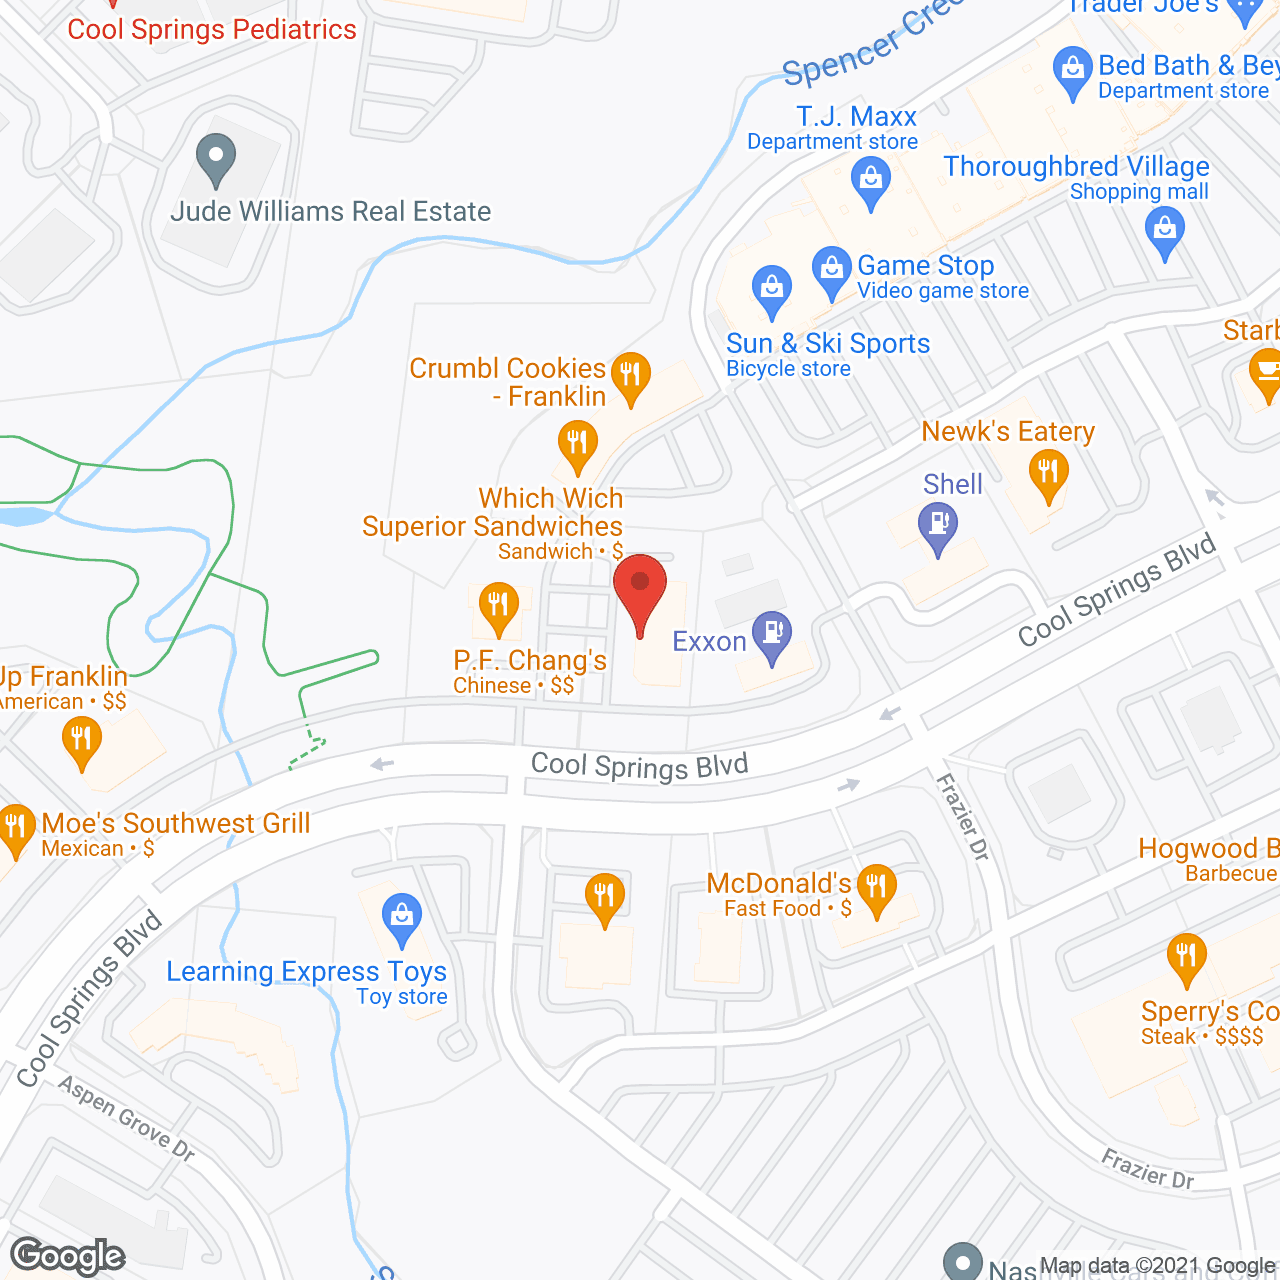 TheKey Nashville in google map